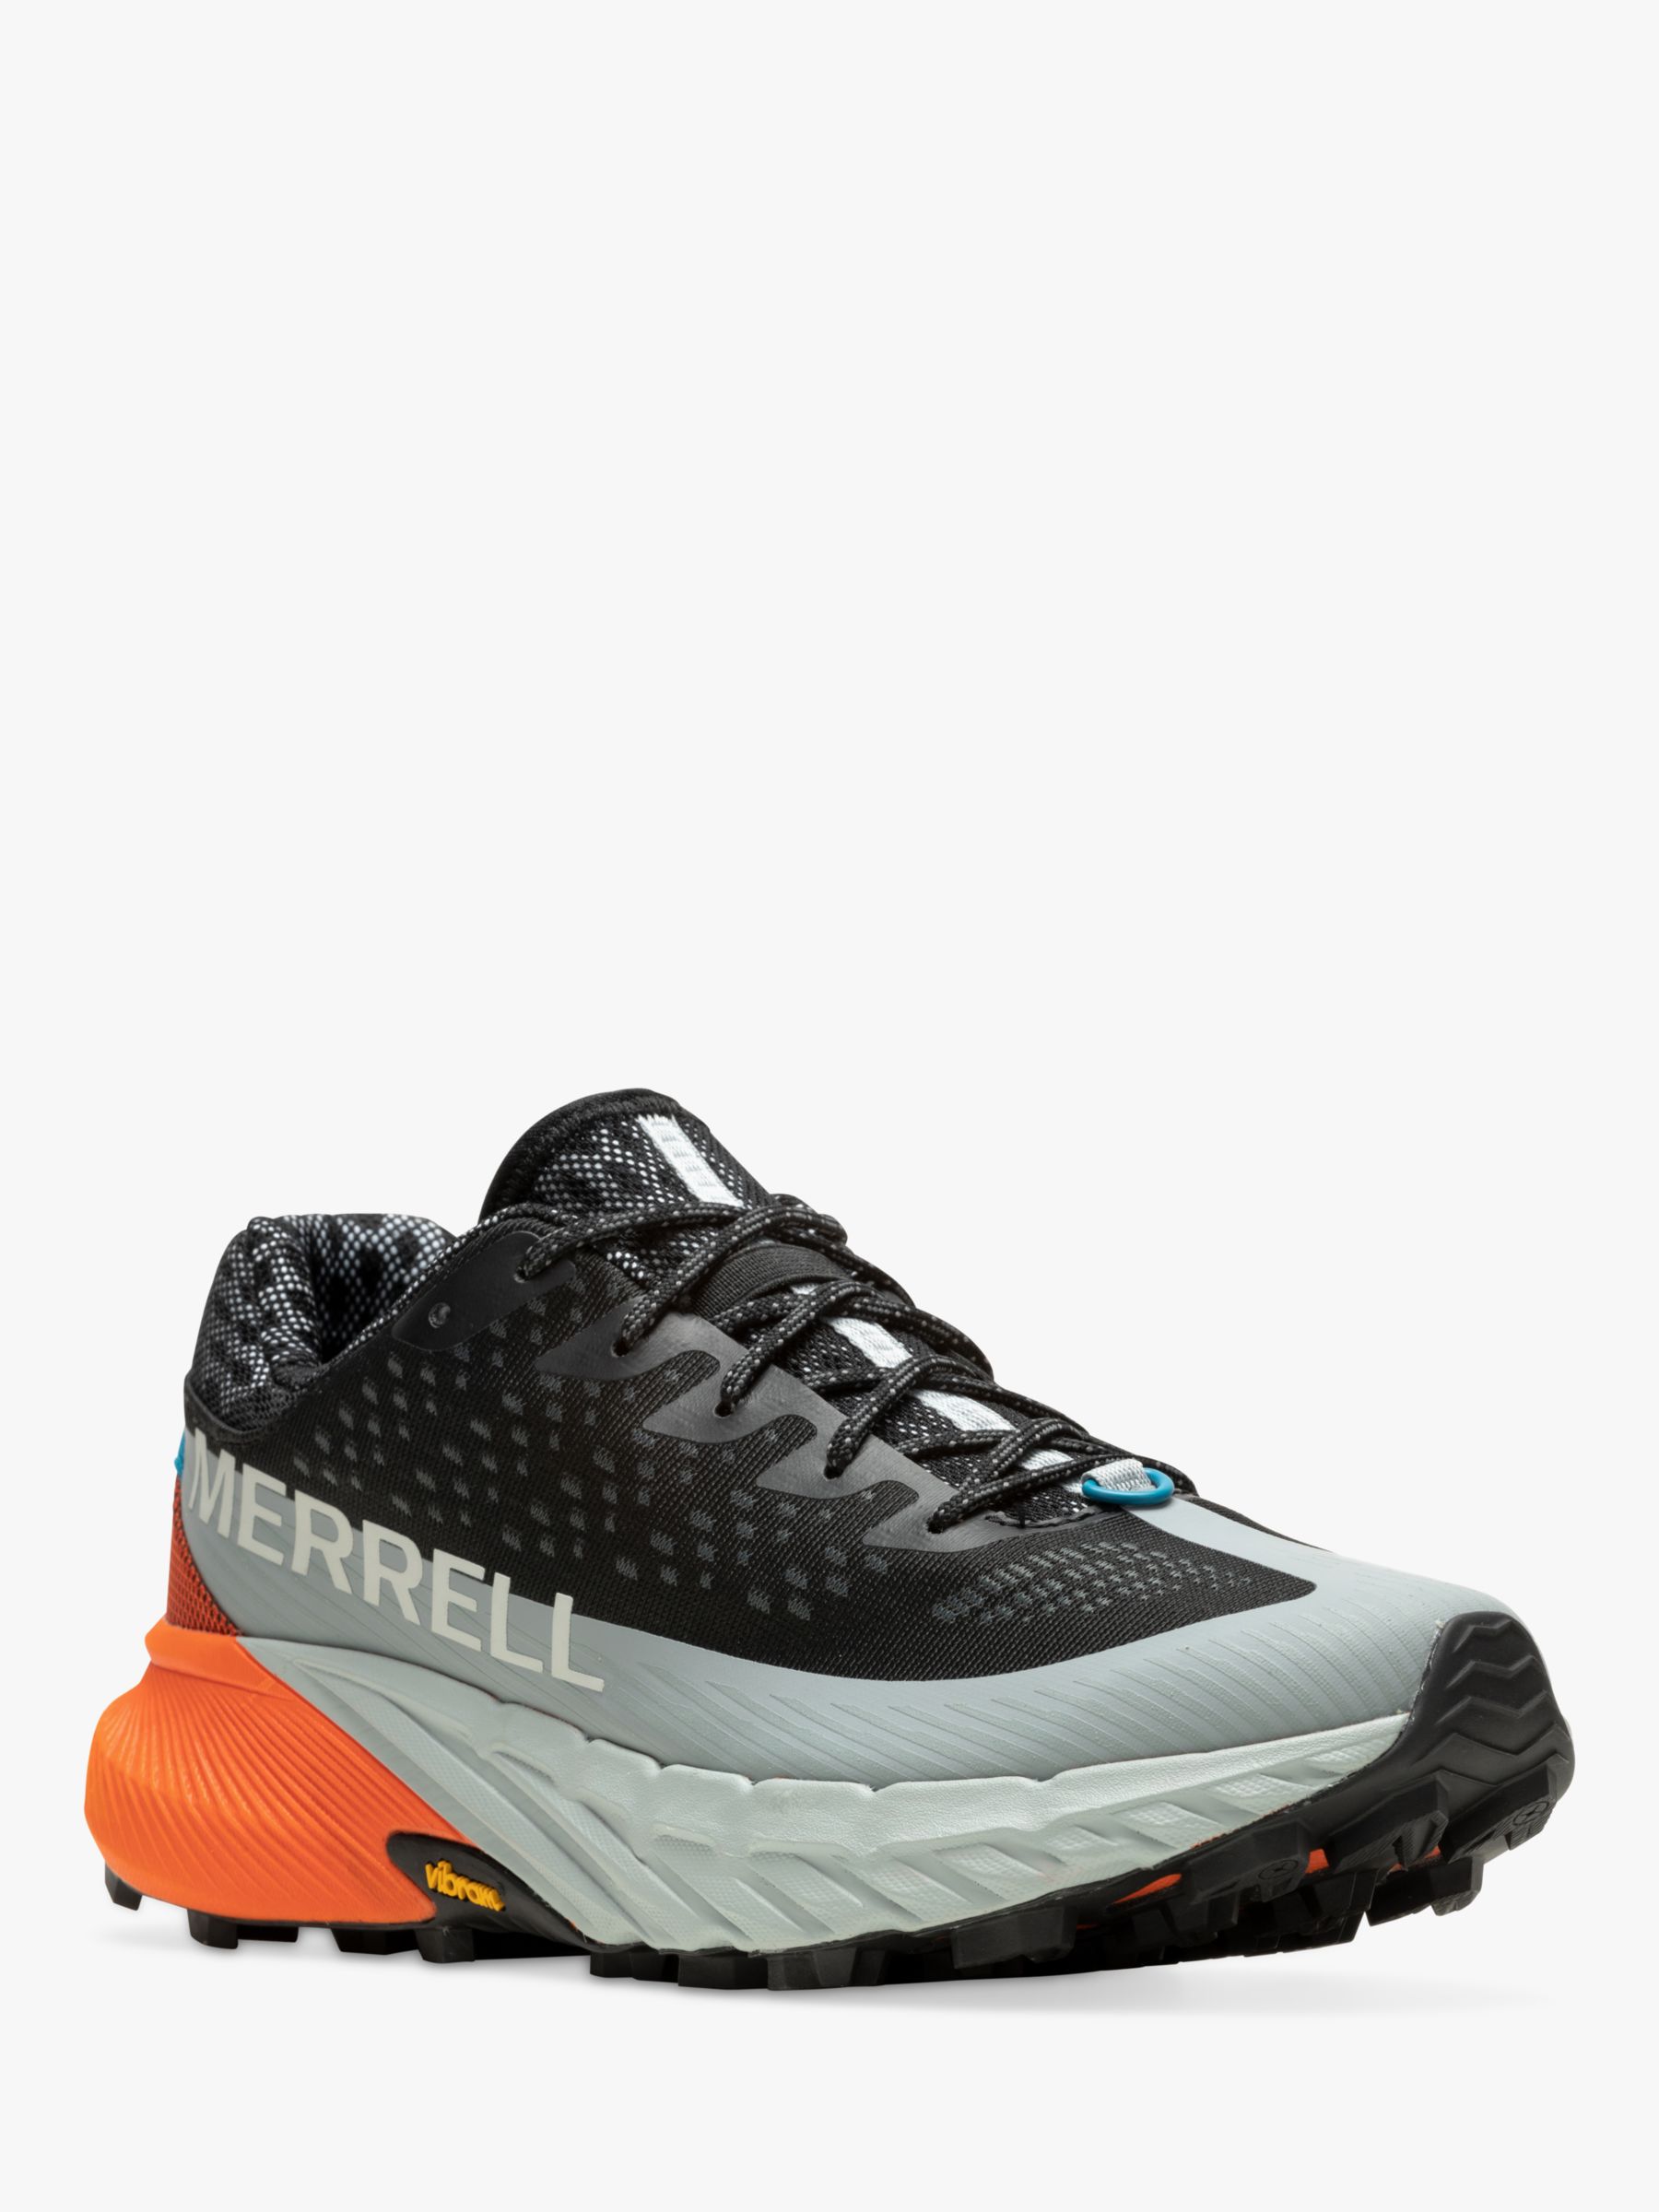 Merrell Agility Peak 5 Men's Trail Running Shoes at John Lewis & Partners